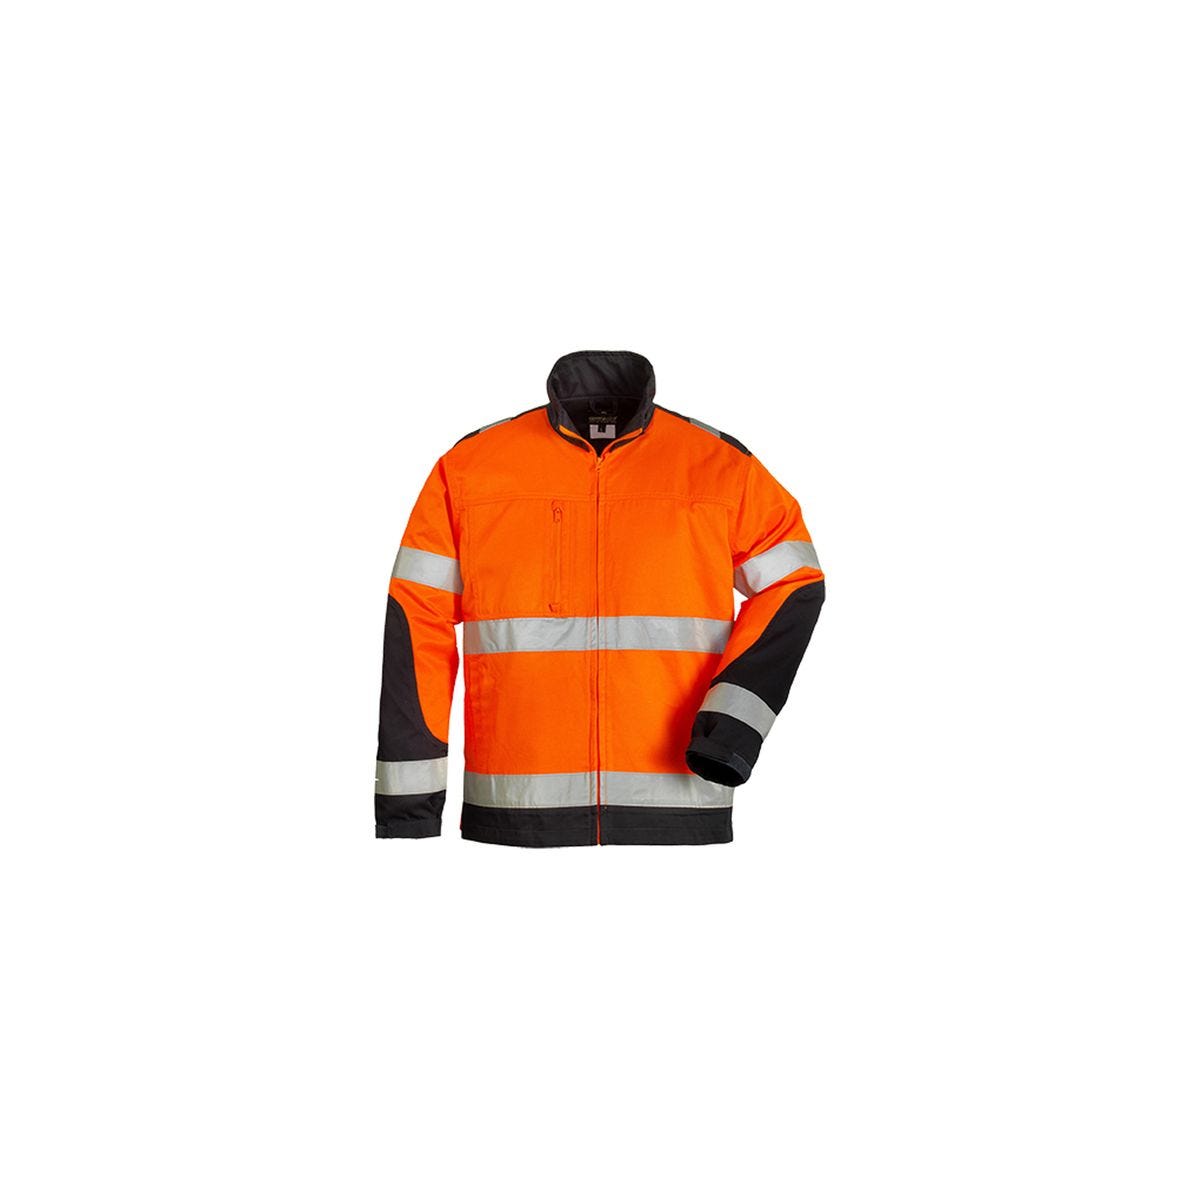 PATROL Veste, orange HV/marine, 60%CO/40%PES, 245g/m² - COVERGUARD - Taille S 0